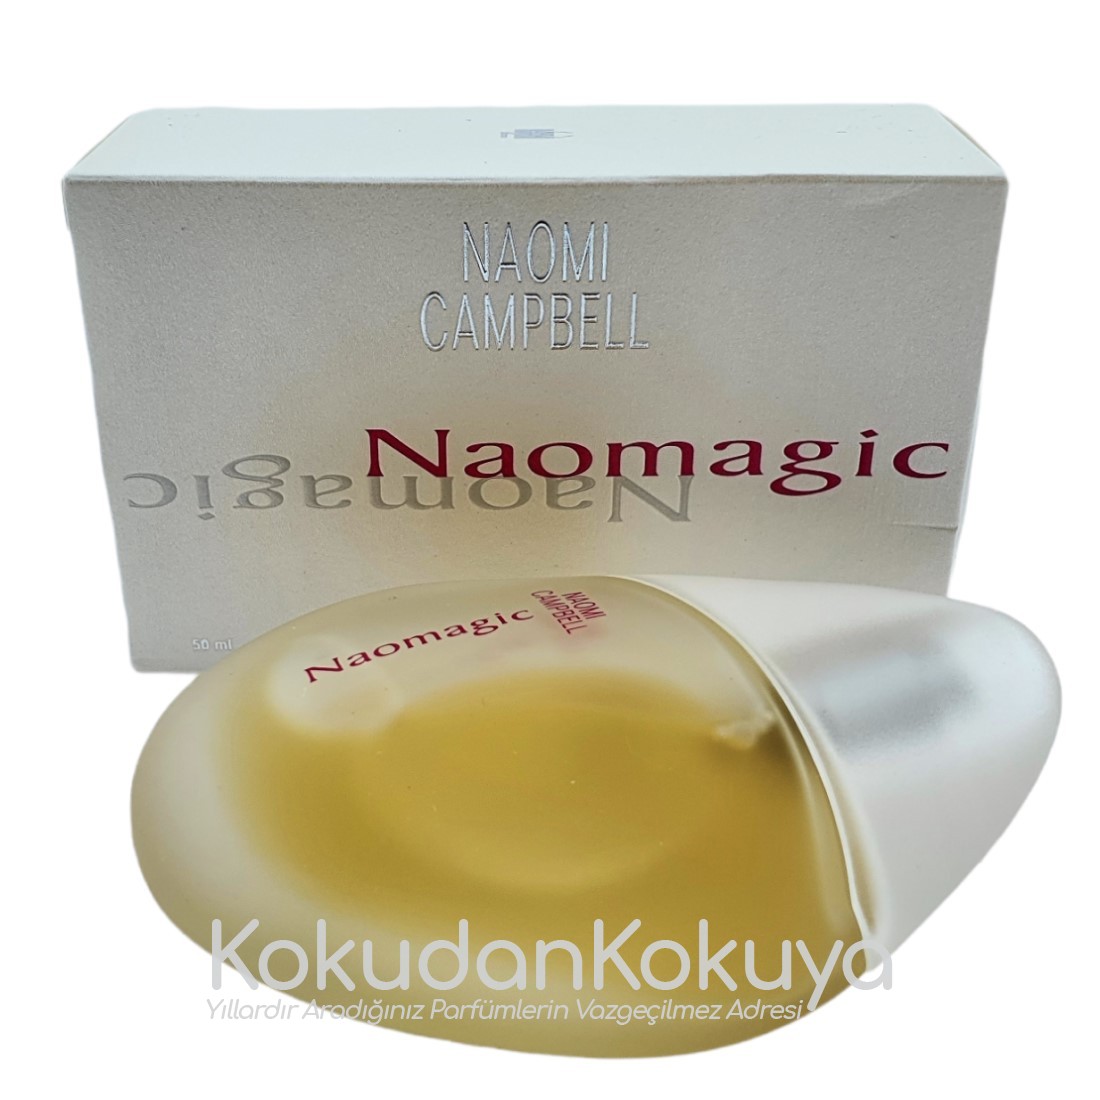 NAOMI CAMPBELL Naomagic (Vintage) Parfüm Kadın 50ml Eau De Toilette (EDT) Sprey 